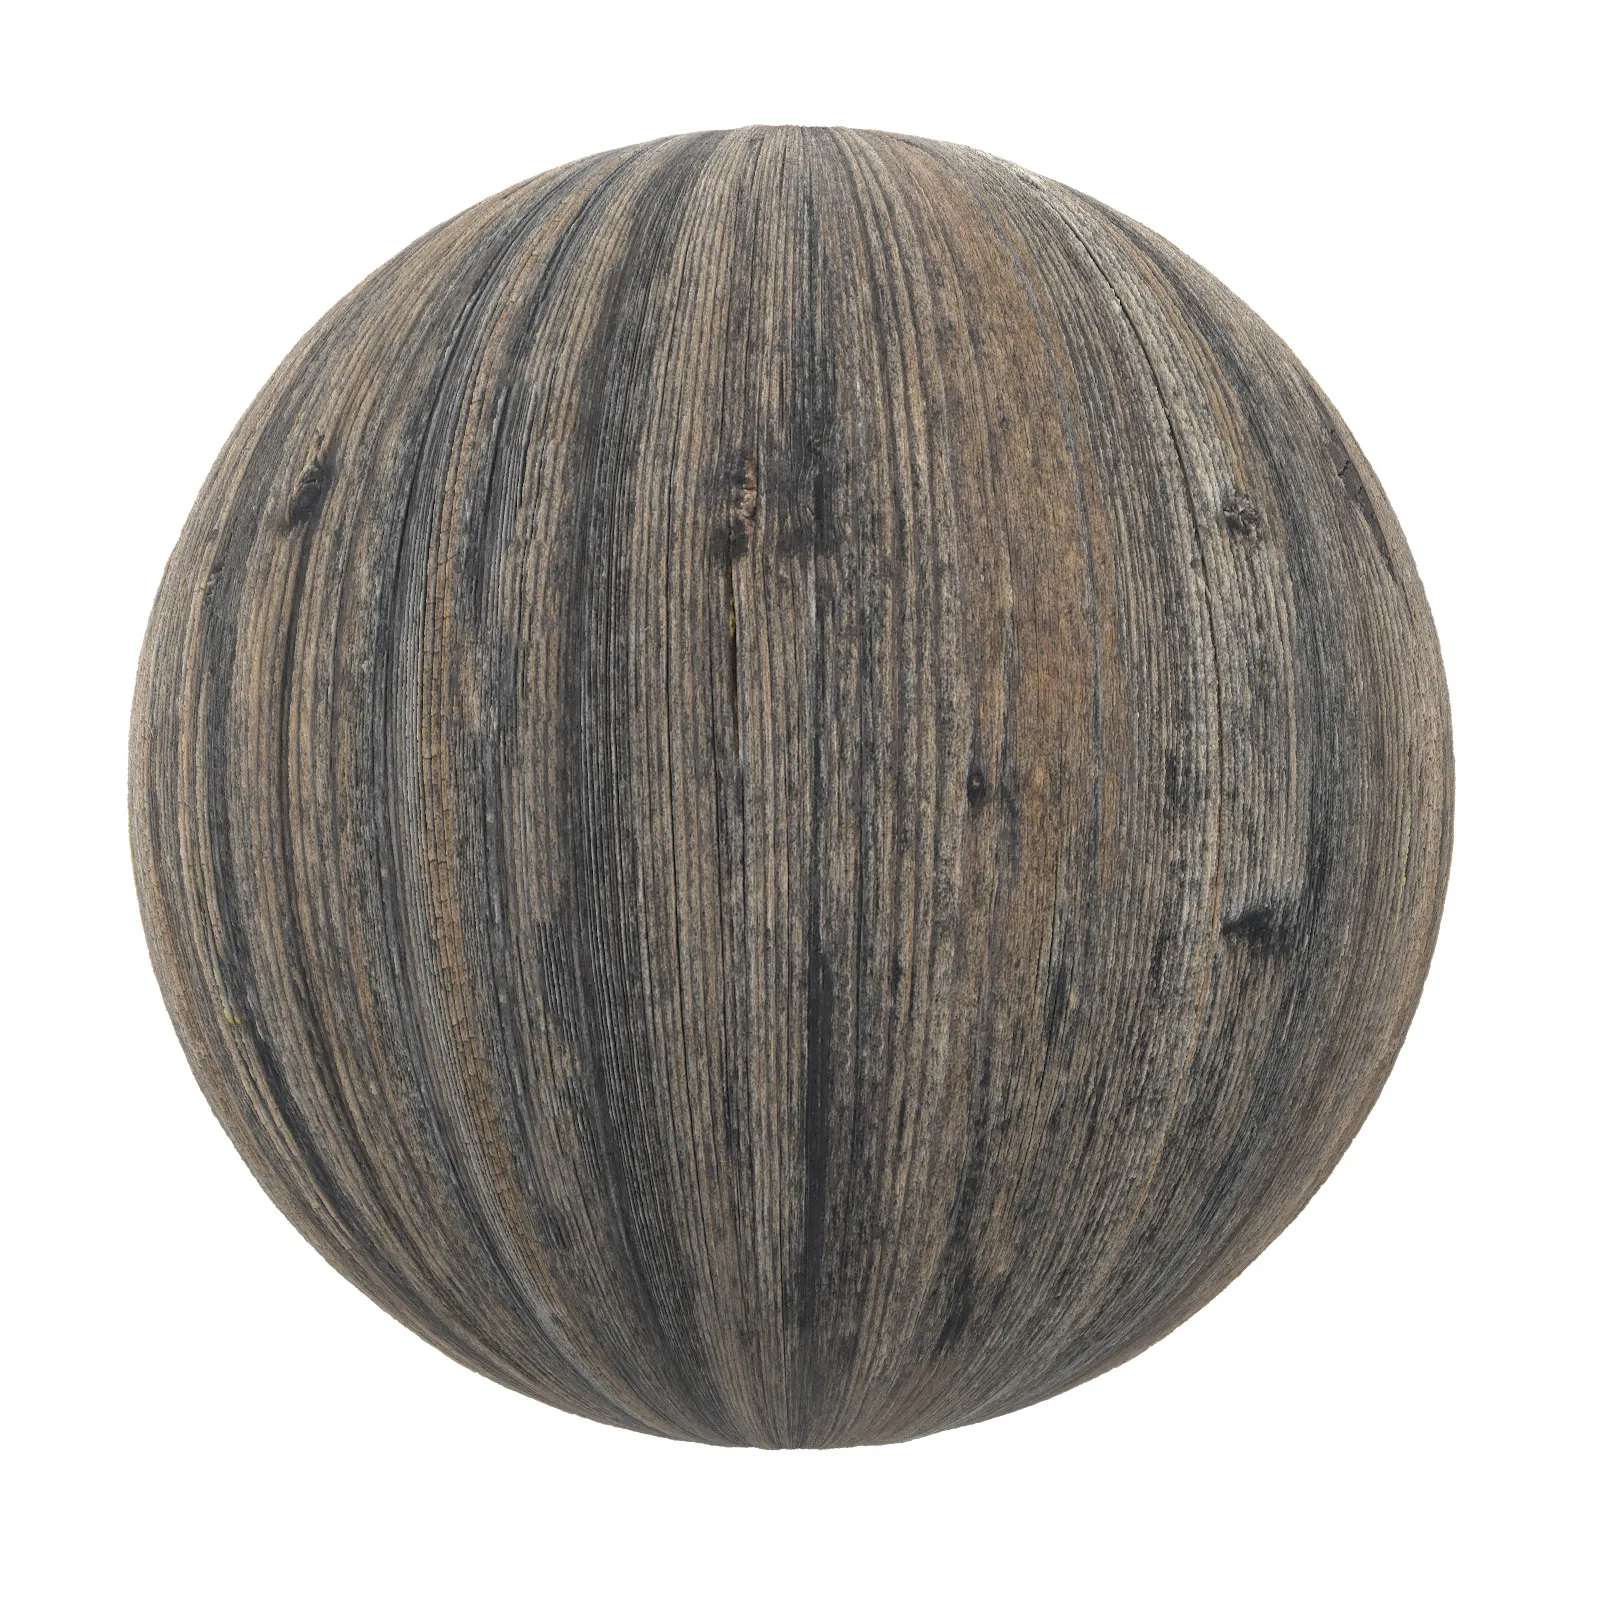 3ds Max Files – Texture – 8 – Wood Texture – 107 – Wood Texture by Minh Nguyen